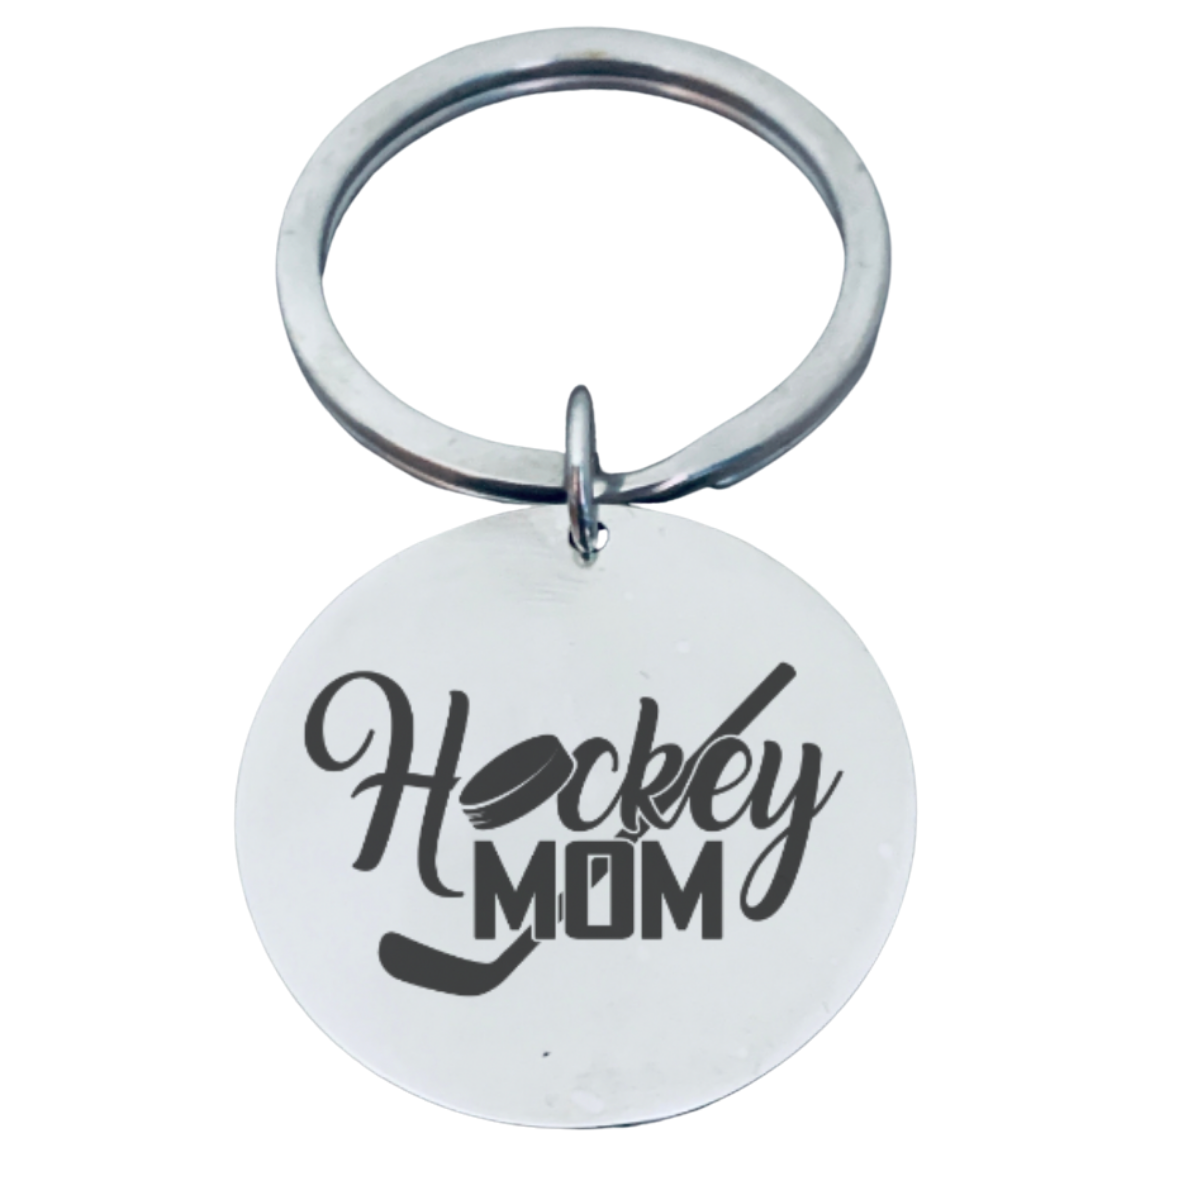 Ice Hockey Mom Charm Keychain